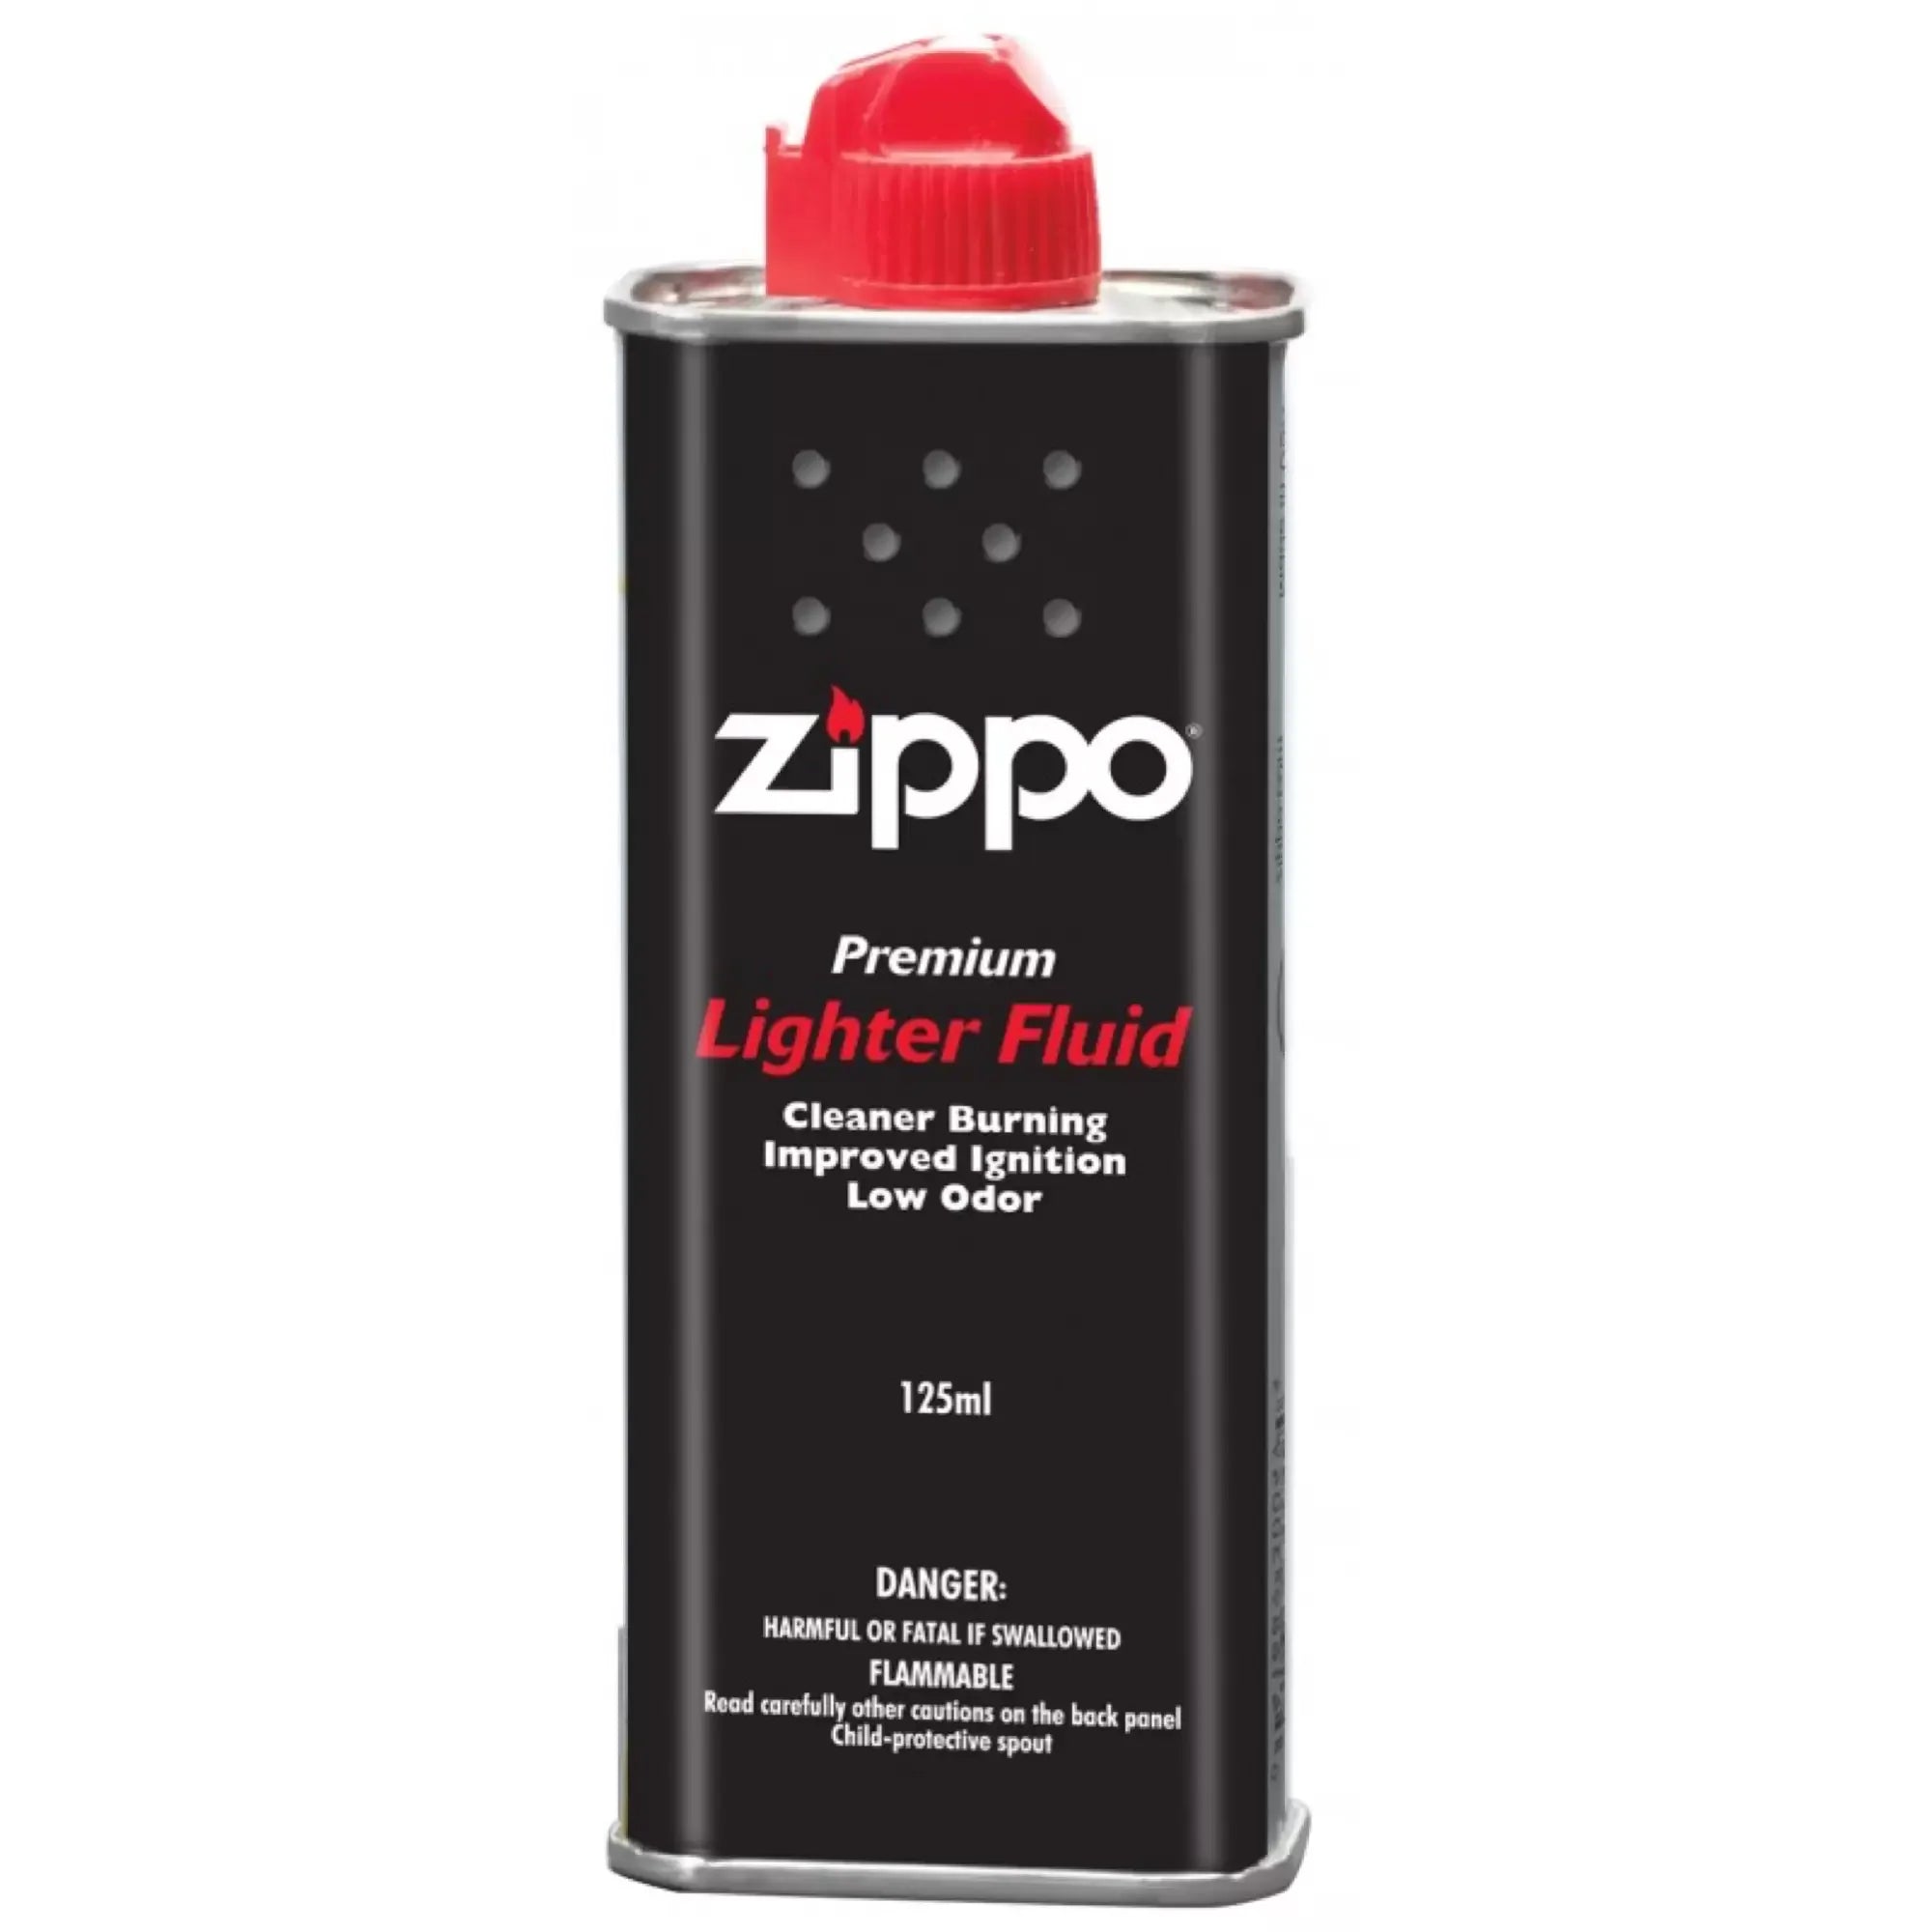 ZIPPO Lighter Fluid 125ml